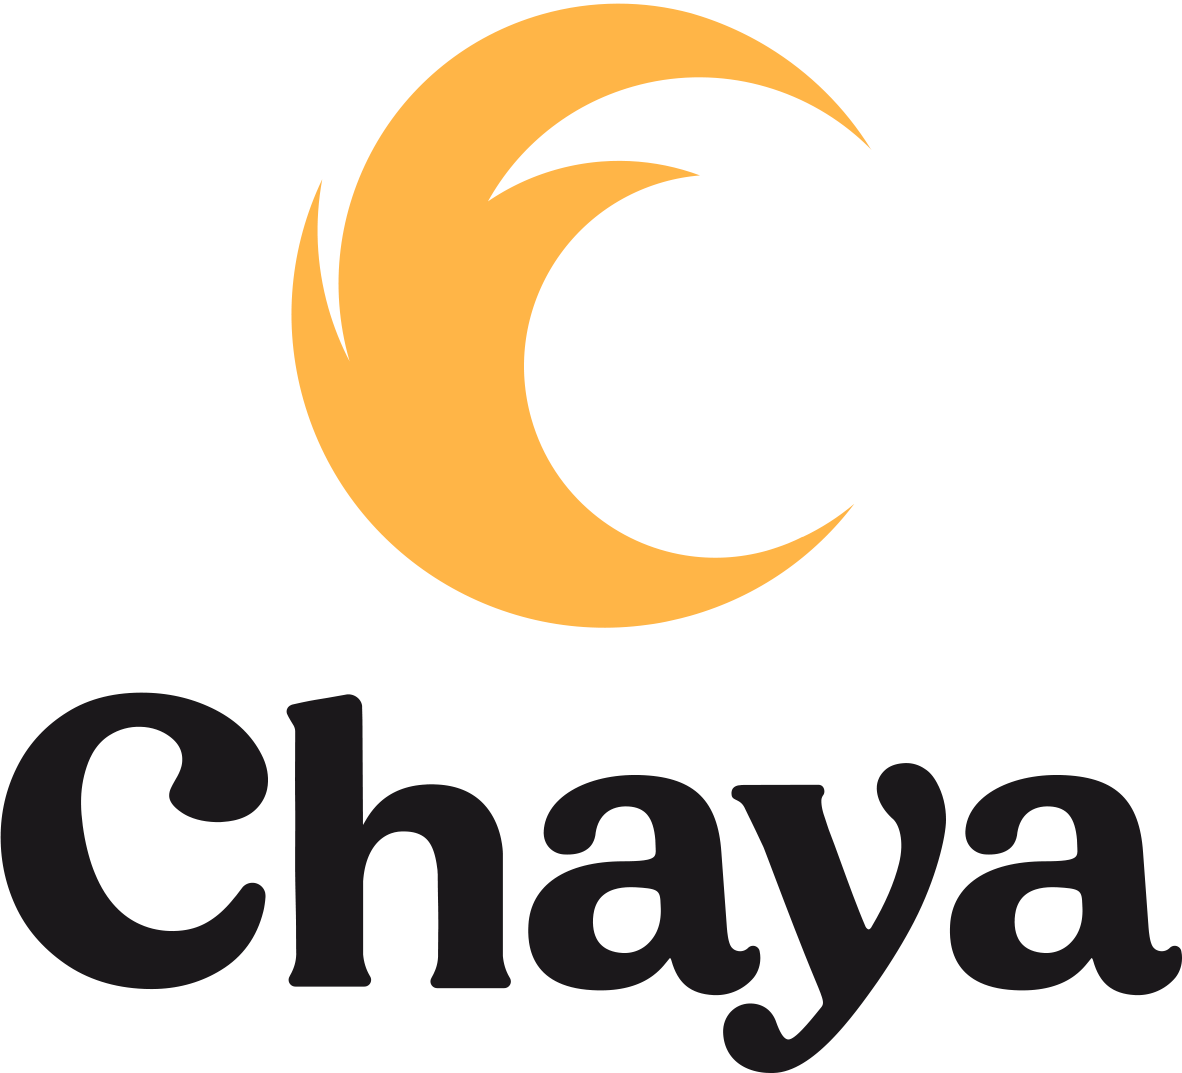 Chaya_Logo_version1_10x10cm_300dpi_CMYK_colored (1).png